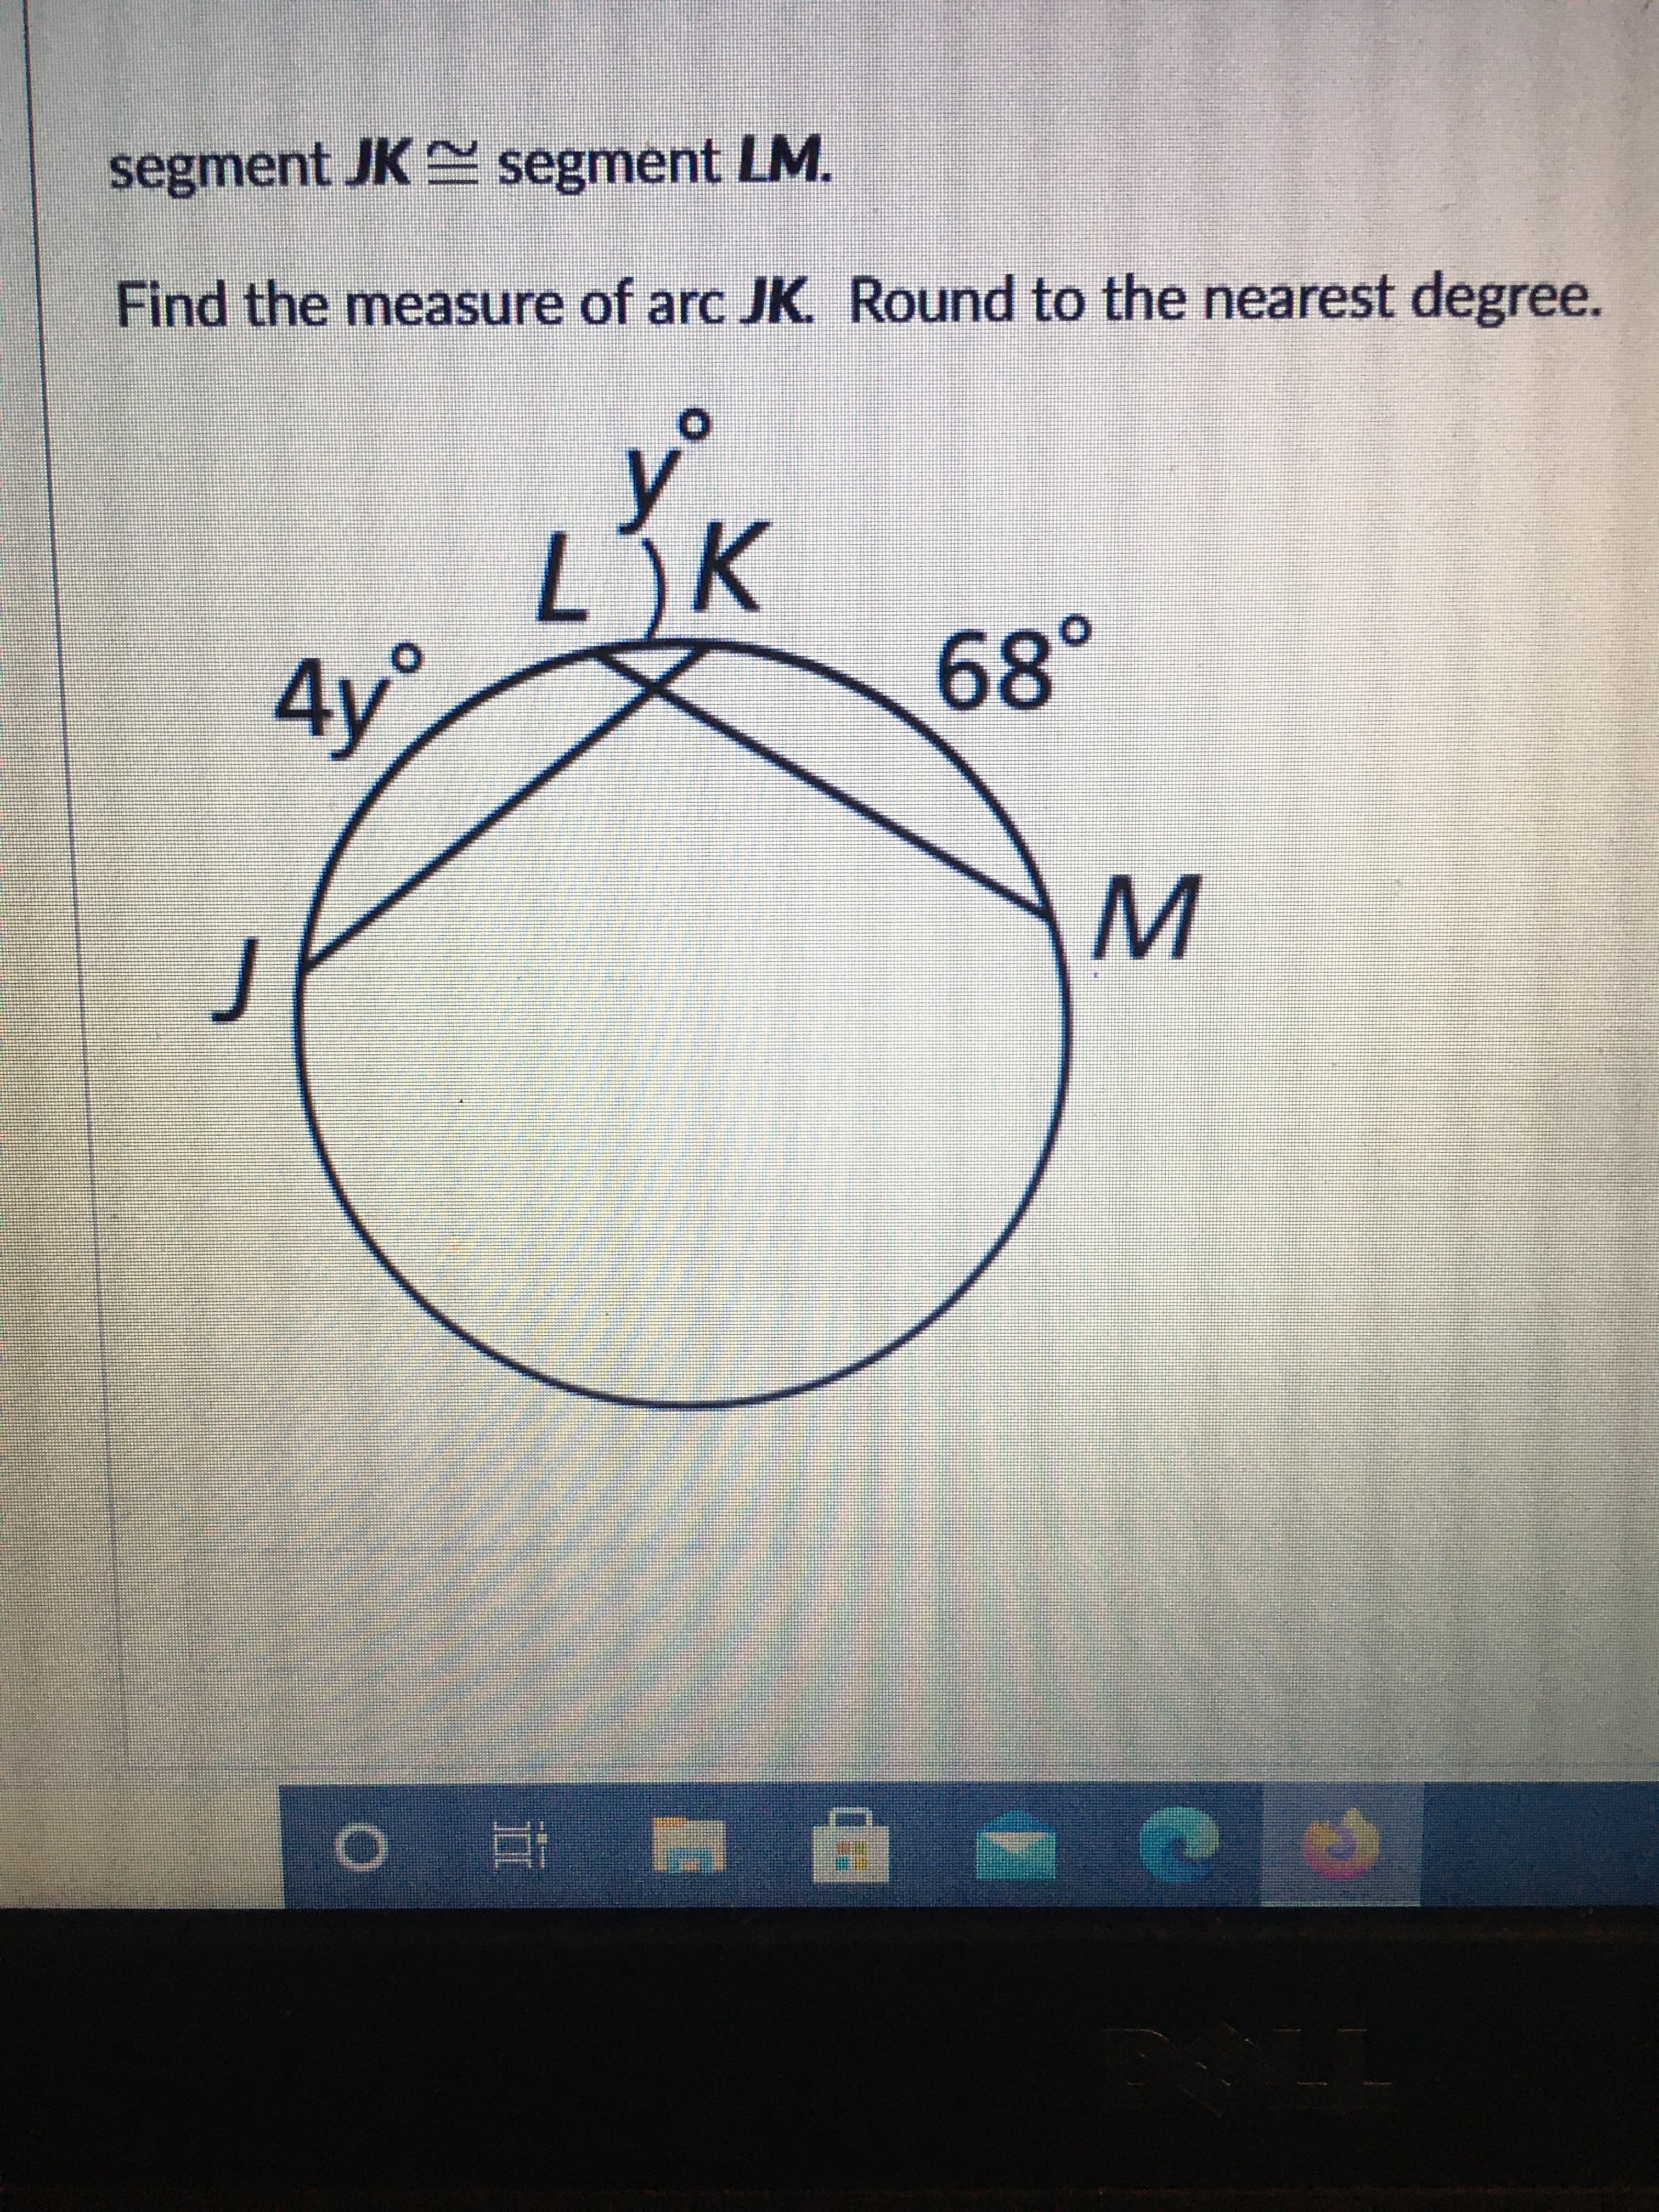 segment JK segment LM.
Find the measure of arc JK. Round to the nearest degree
